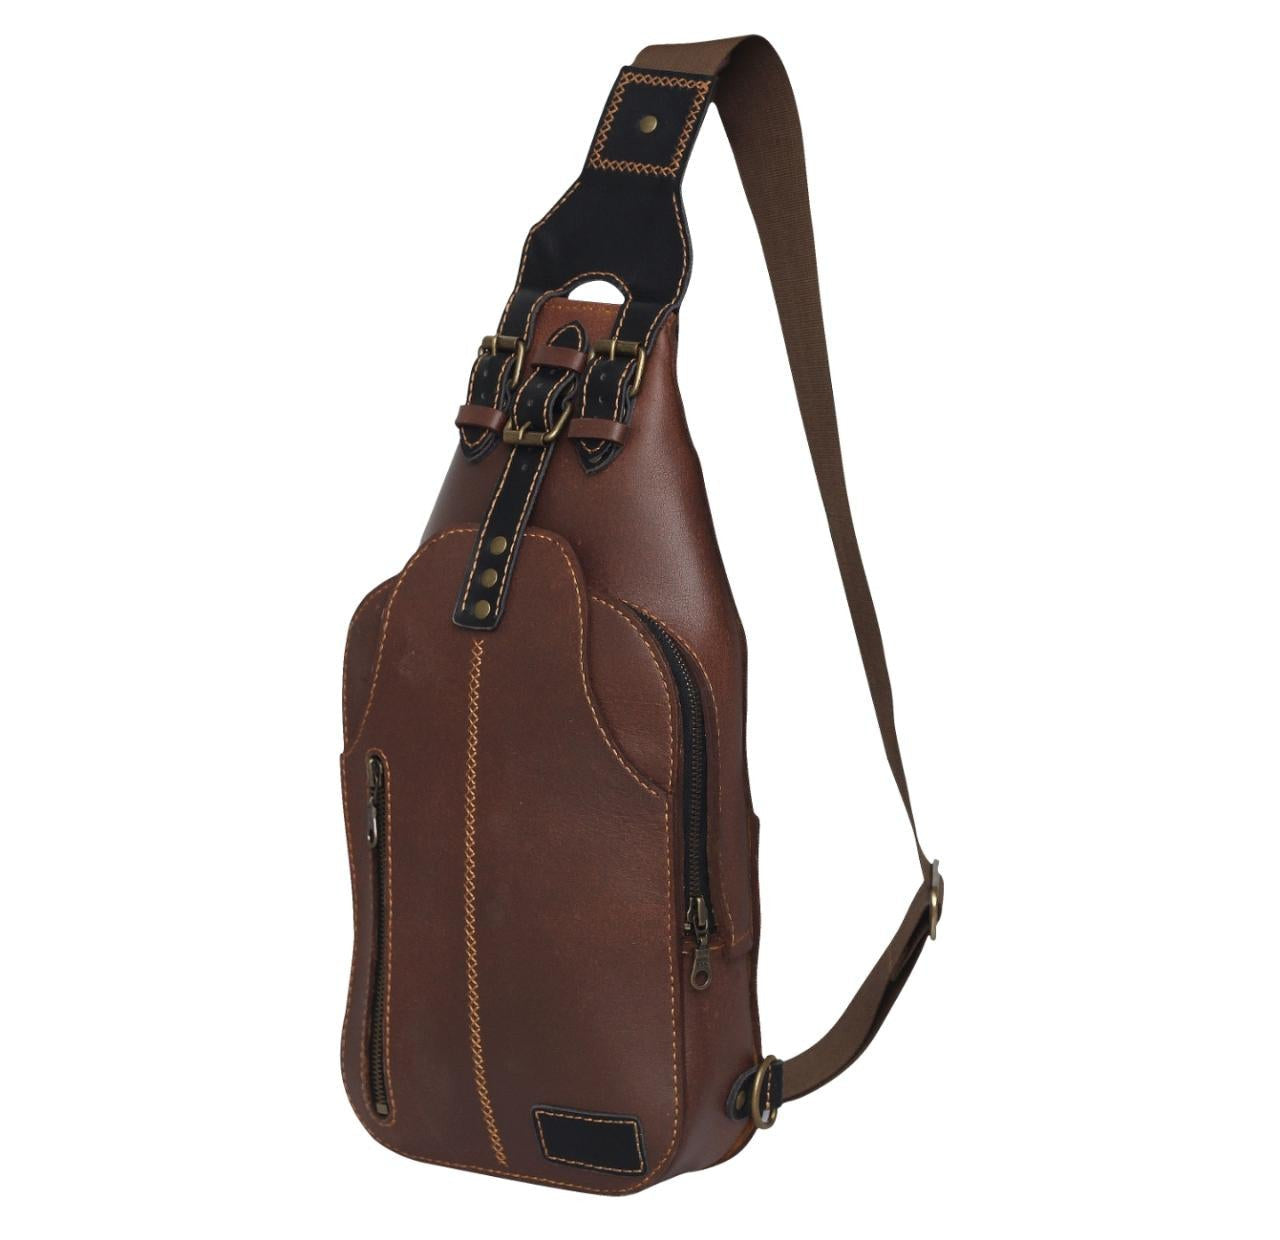 leather bag,leather sling,leather sling bag,crossbody bag,leather crossbody bag,brown b ag,brown leather bag,authantic bag